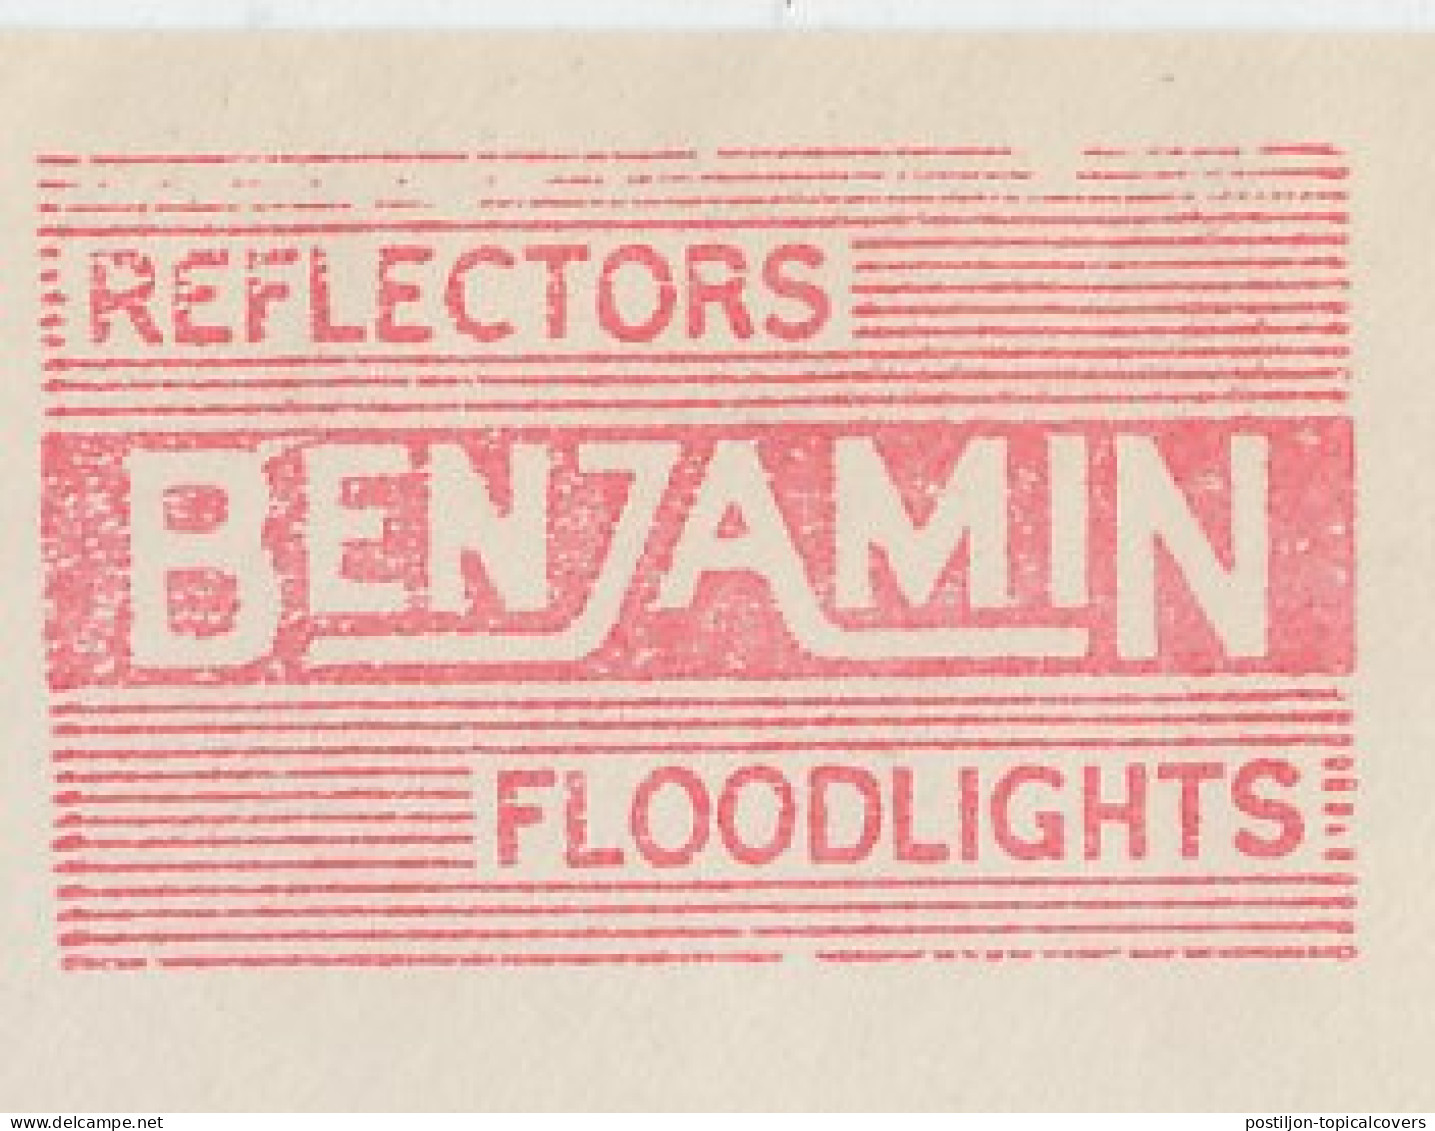 Meter Top Cut USA 1939 Reflectors - Floodlights - Electricidad